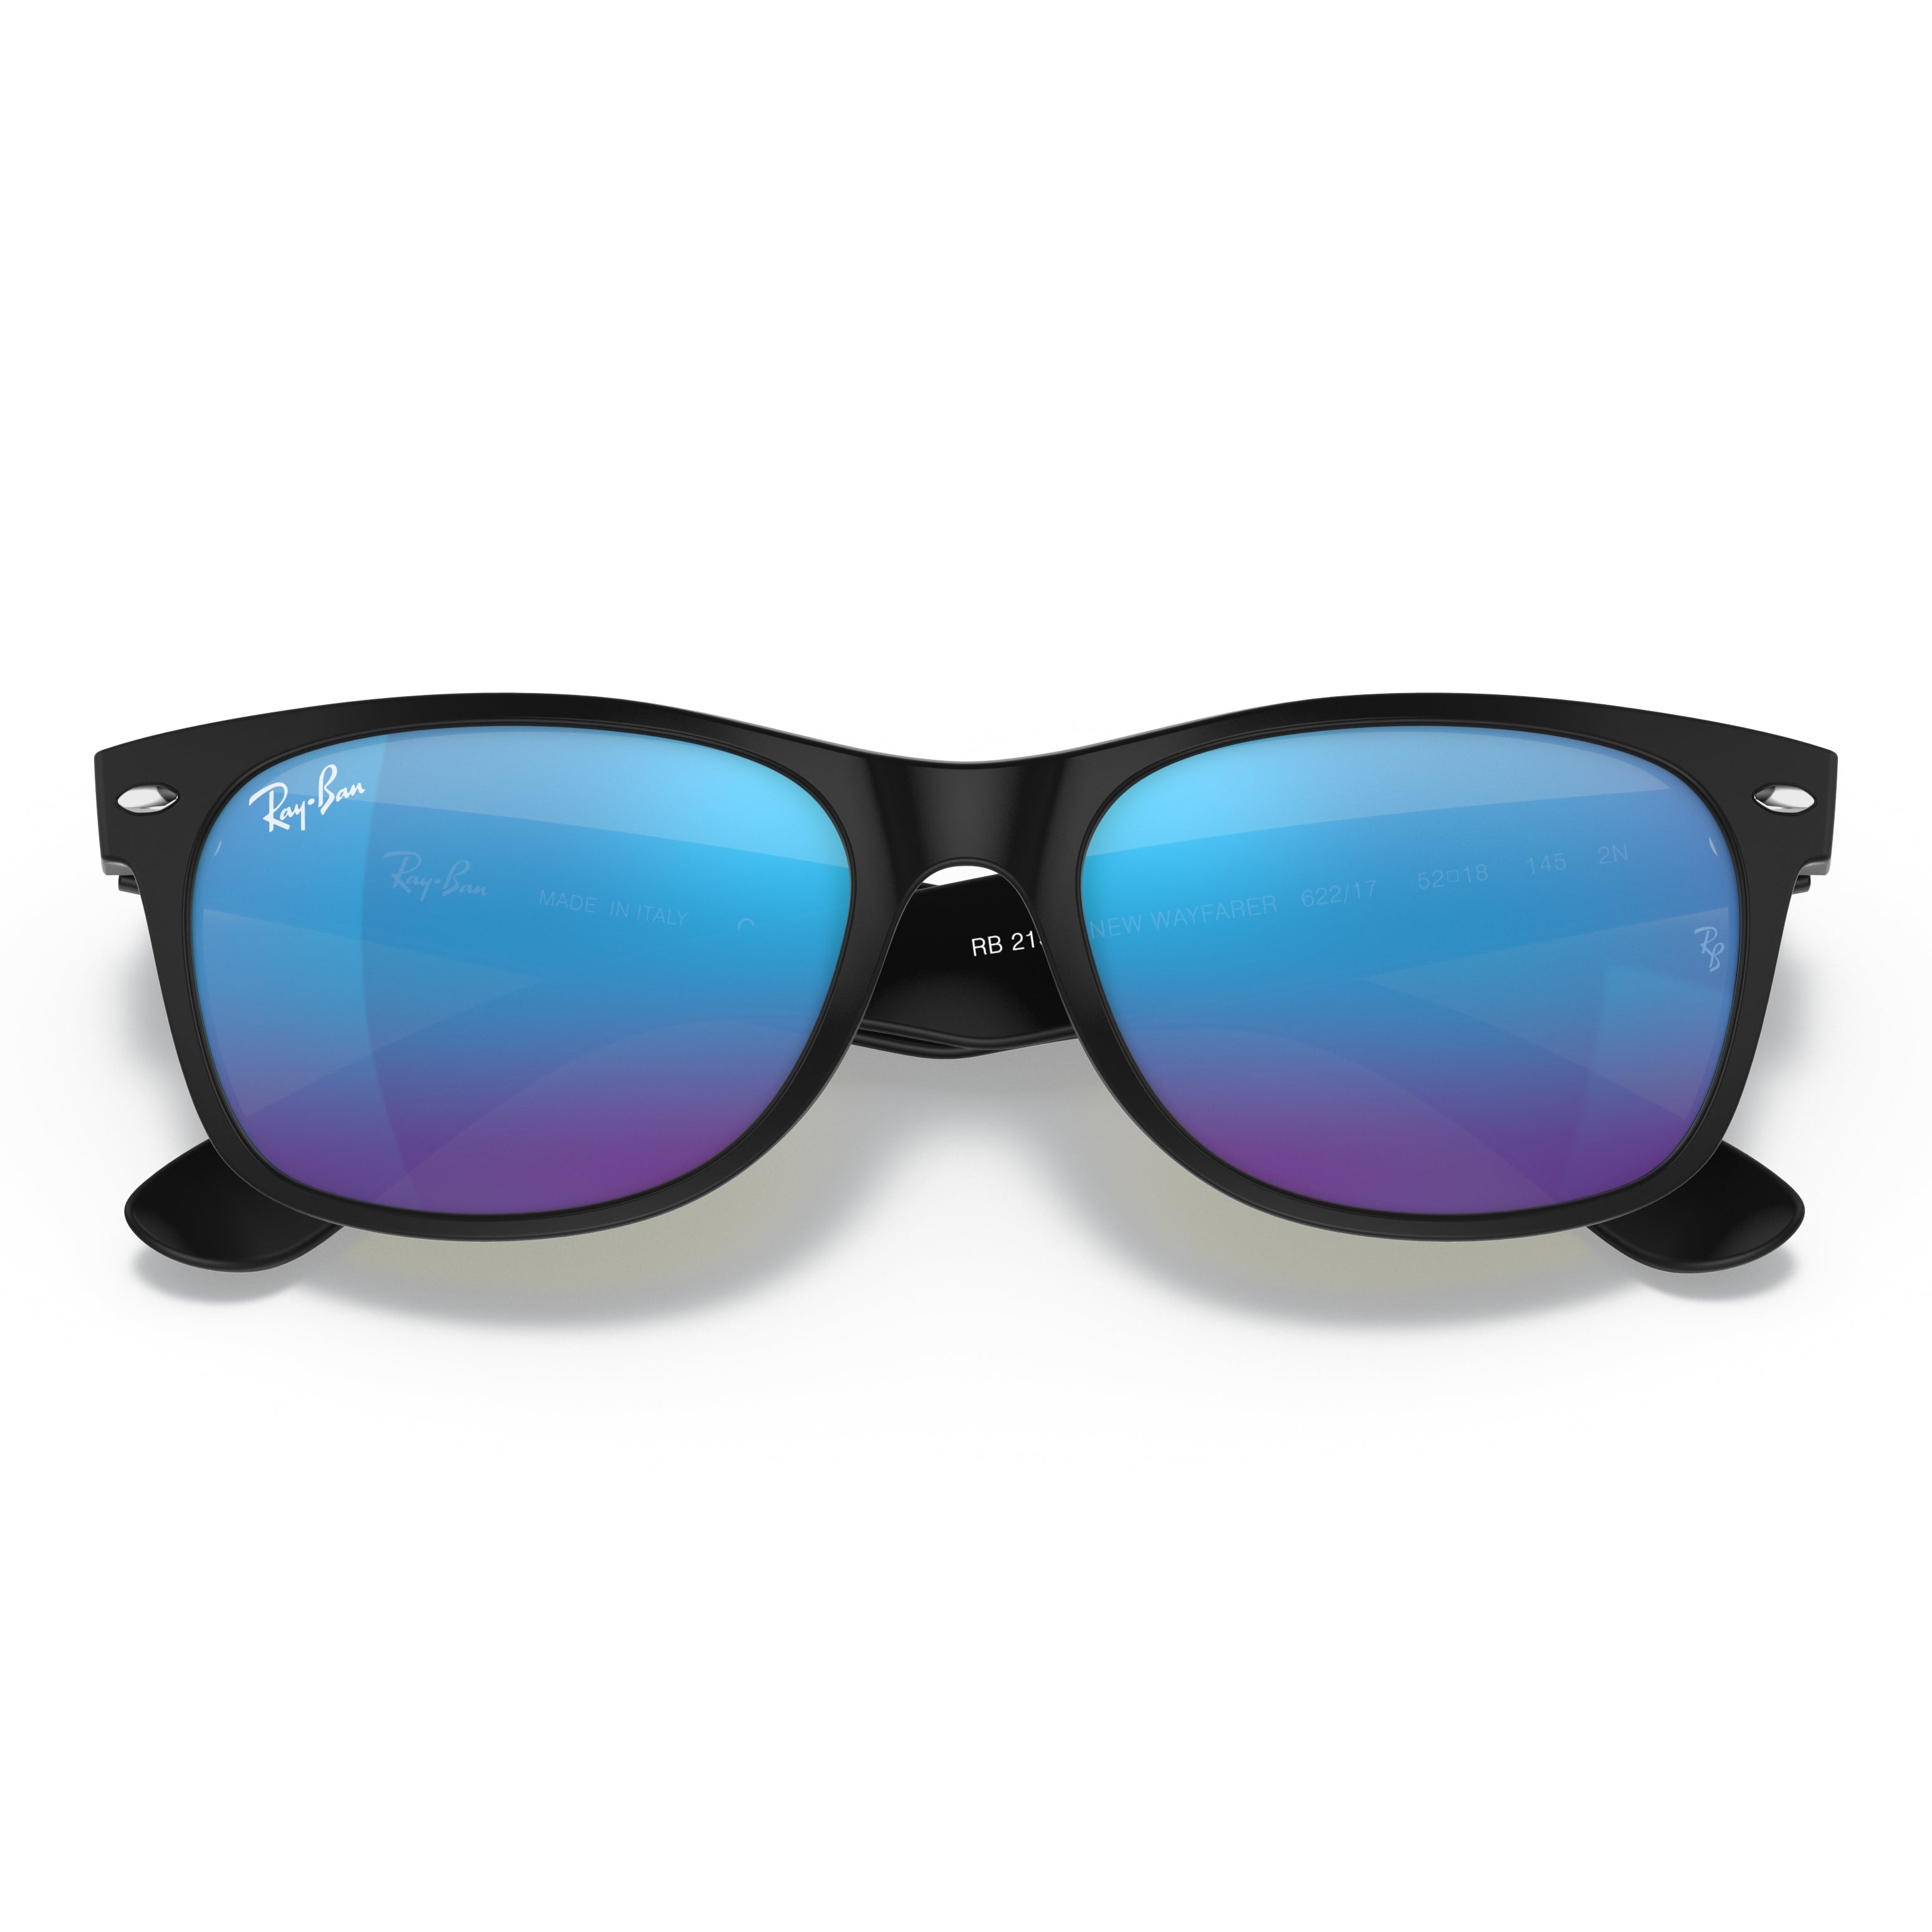 Ray-Ban Ray-Ban Wayfarer Blue Mirrored Mirrored Wayfarer Men's Sunglasses RB2132 622/17 55